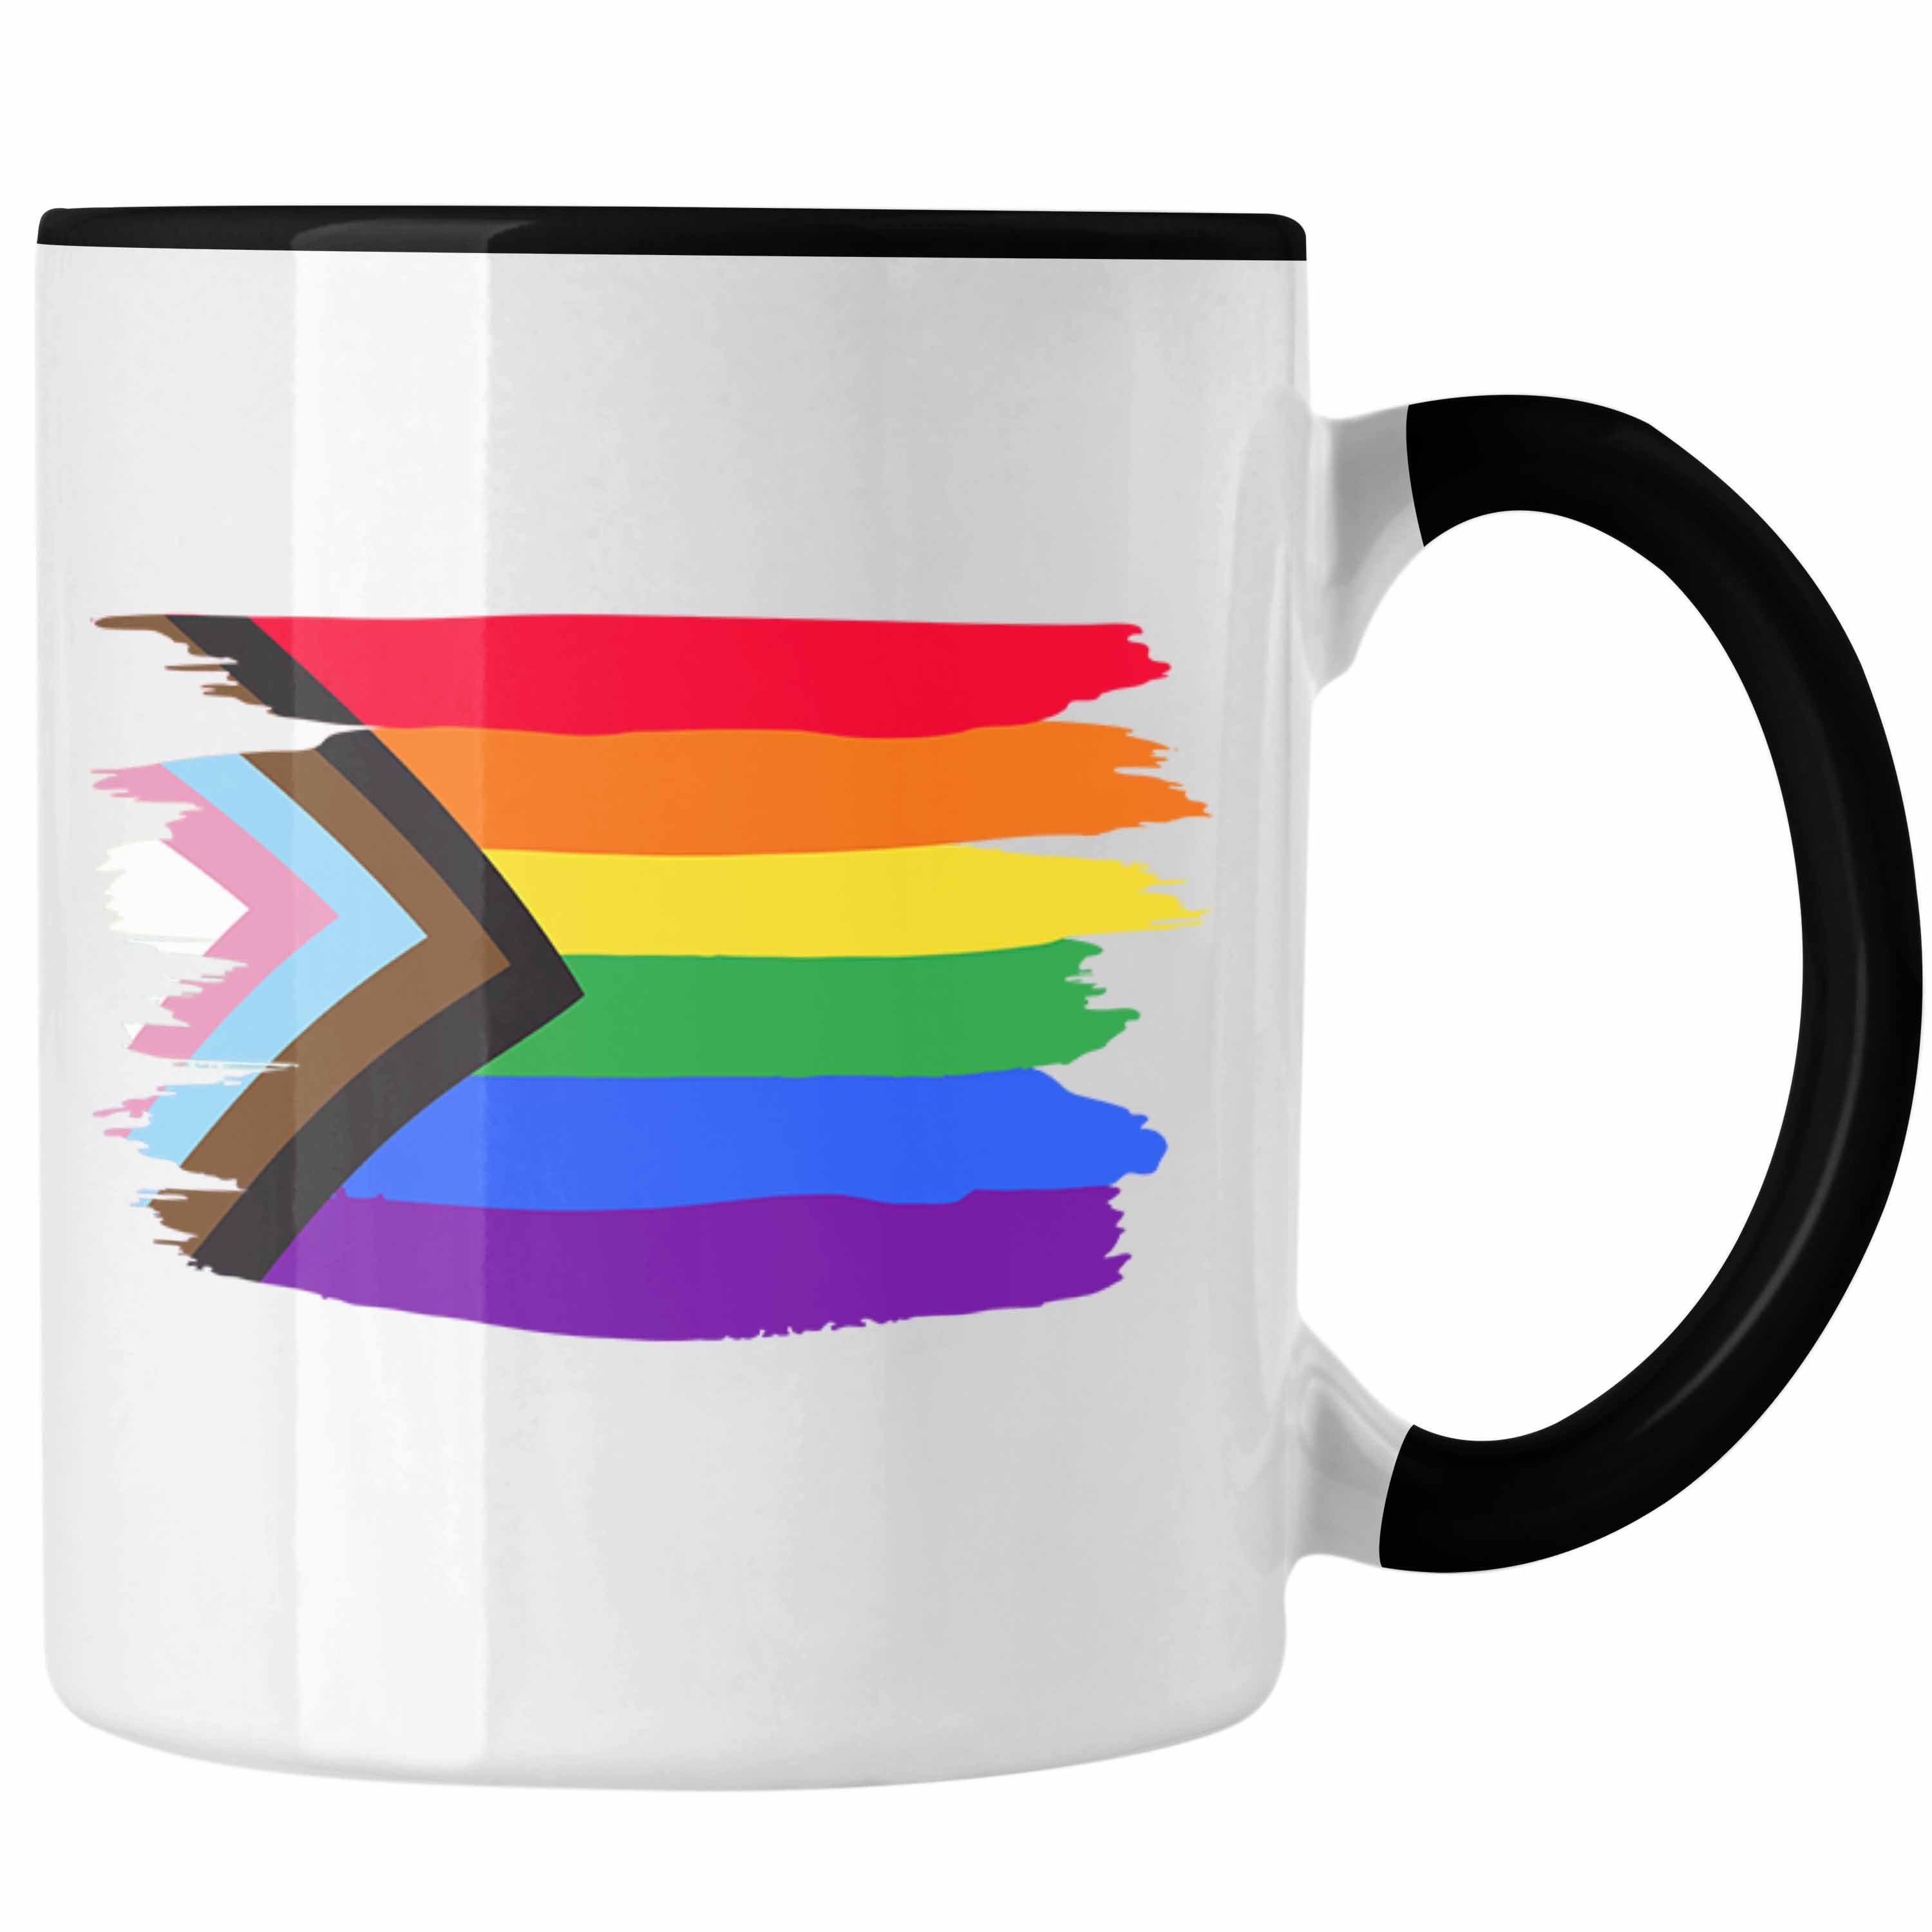 Trendation Tasse Trendation - Regenbogen Tasse Geschenk LGBT Schwule Lesben Transgender Grafik Pride Flagge Schwarz